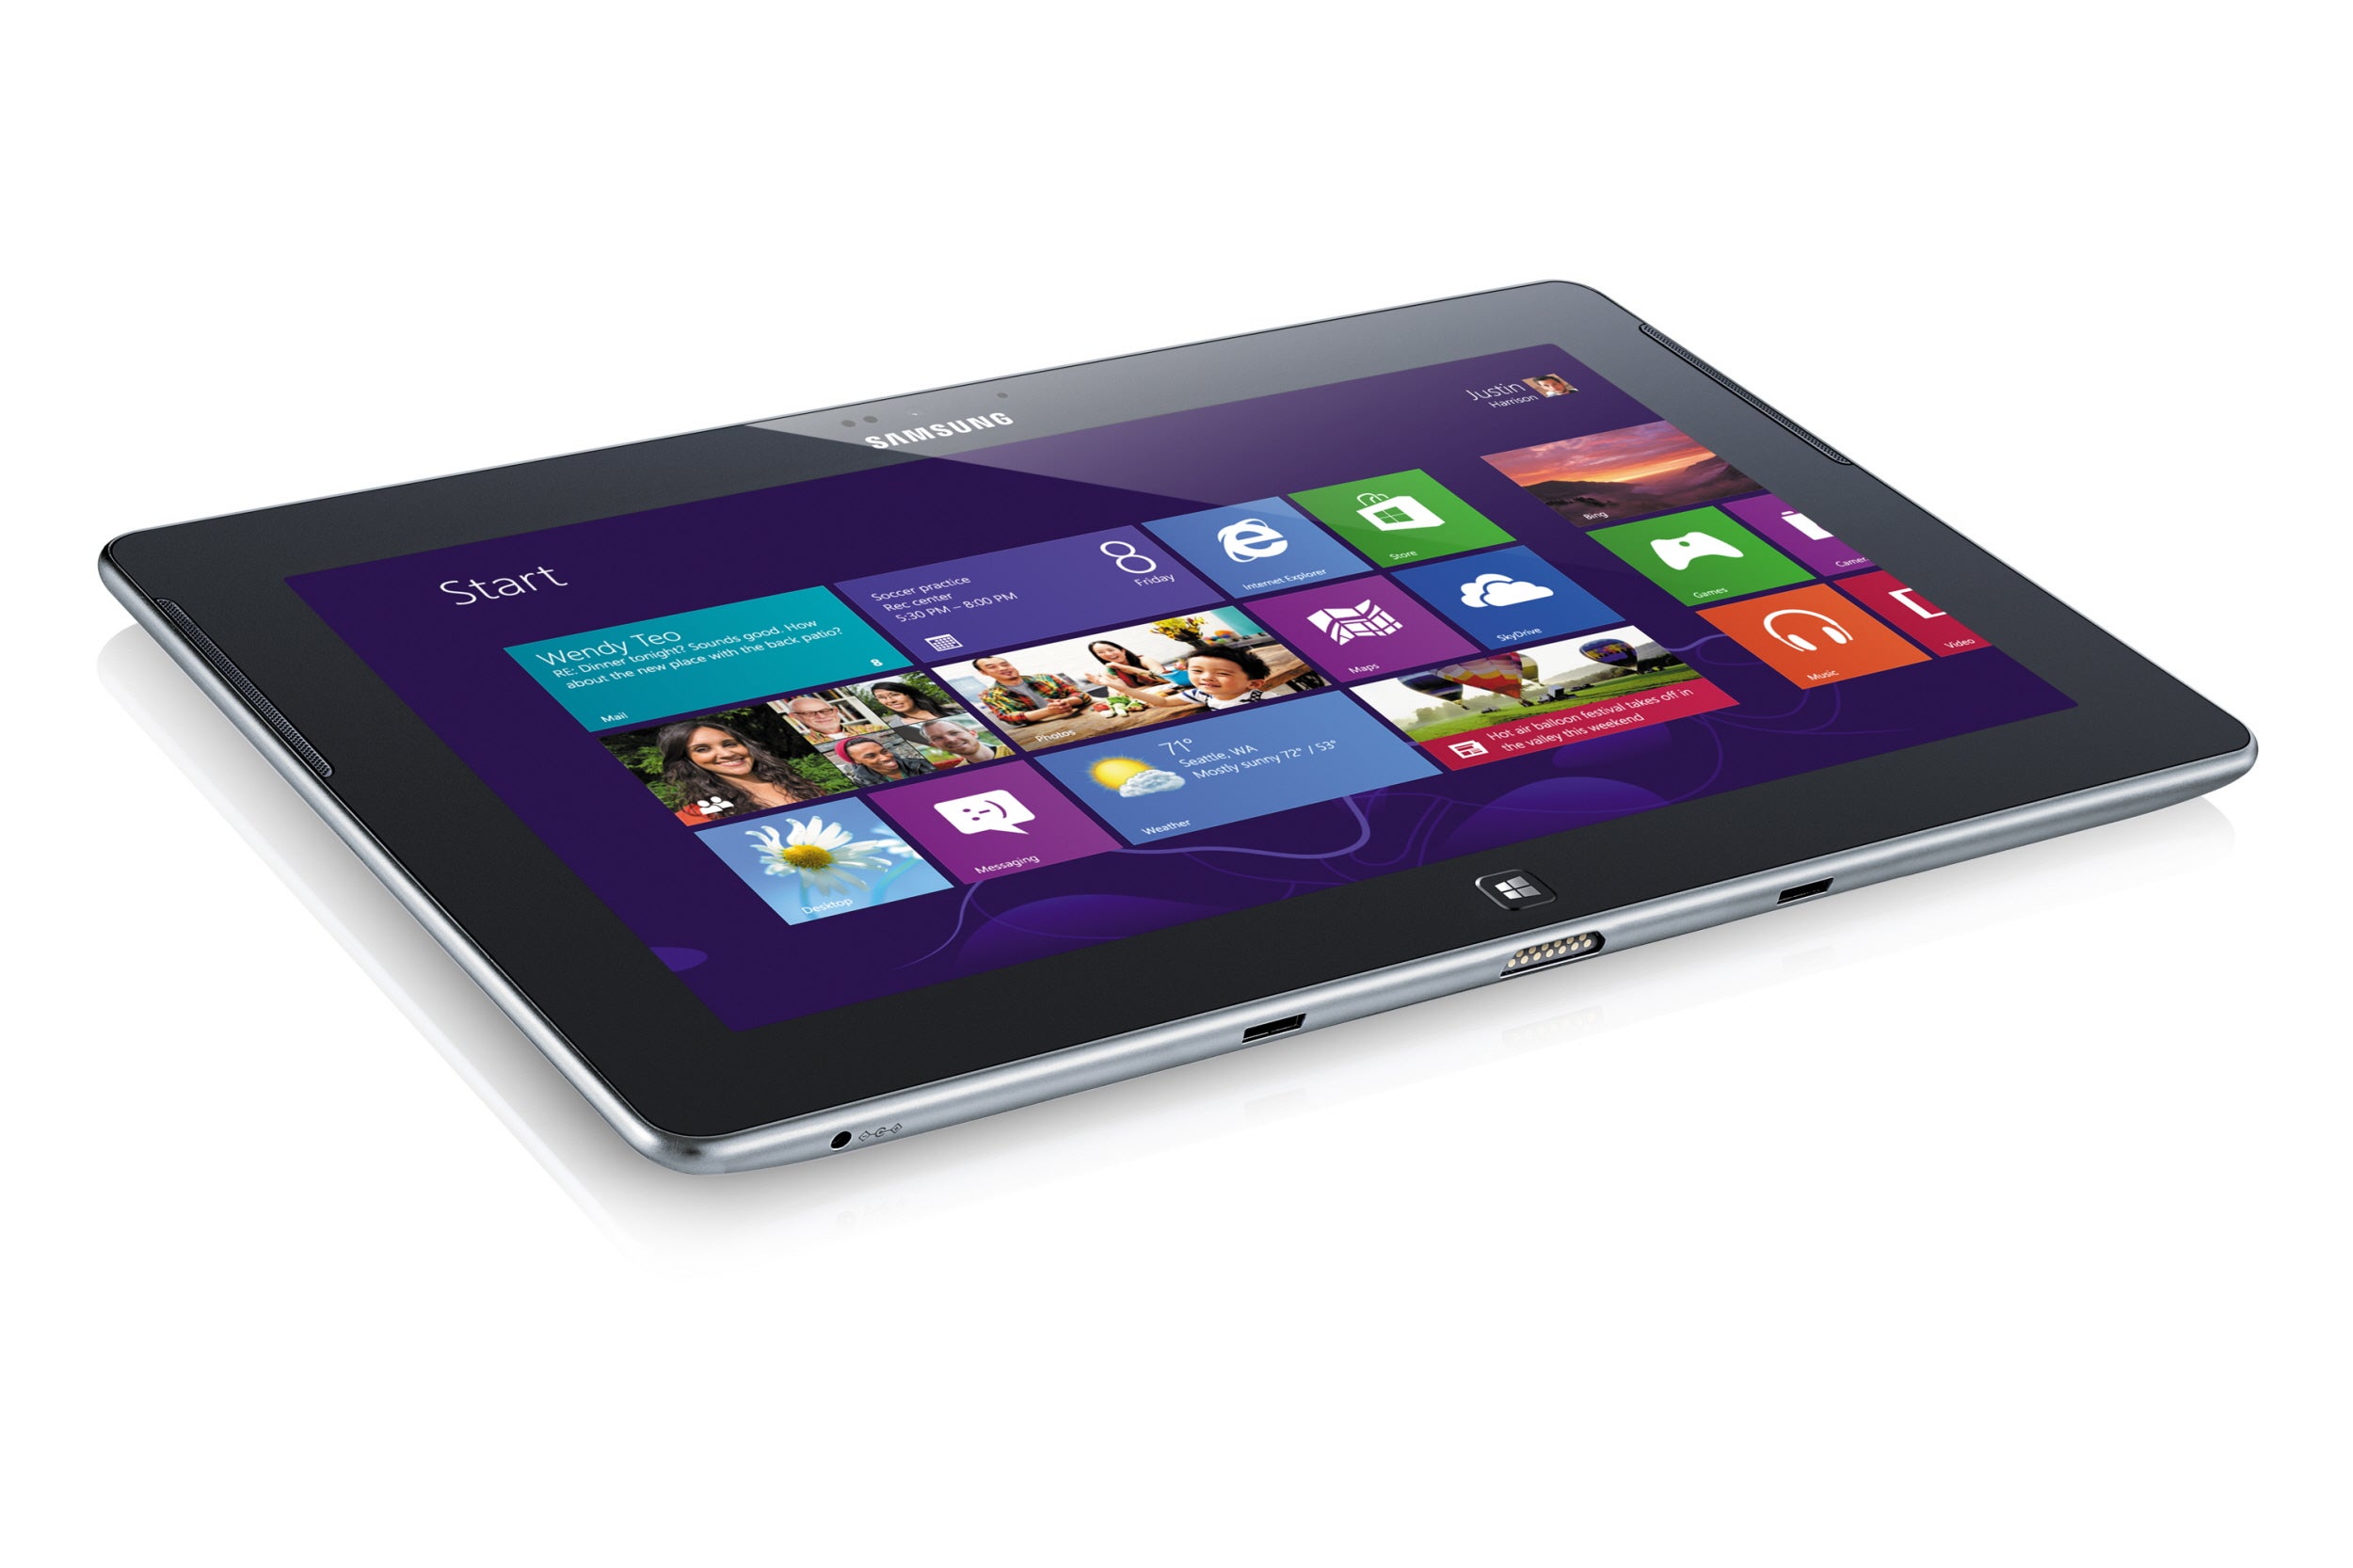 No U.S. launch for the Samsung ATIV Tab - No U.S. launch coming for the Samsung ATIV Tab Windows RT tablet